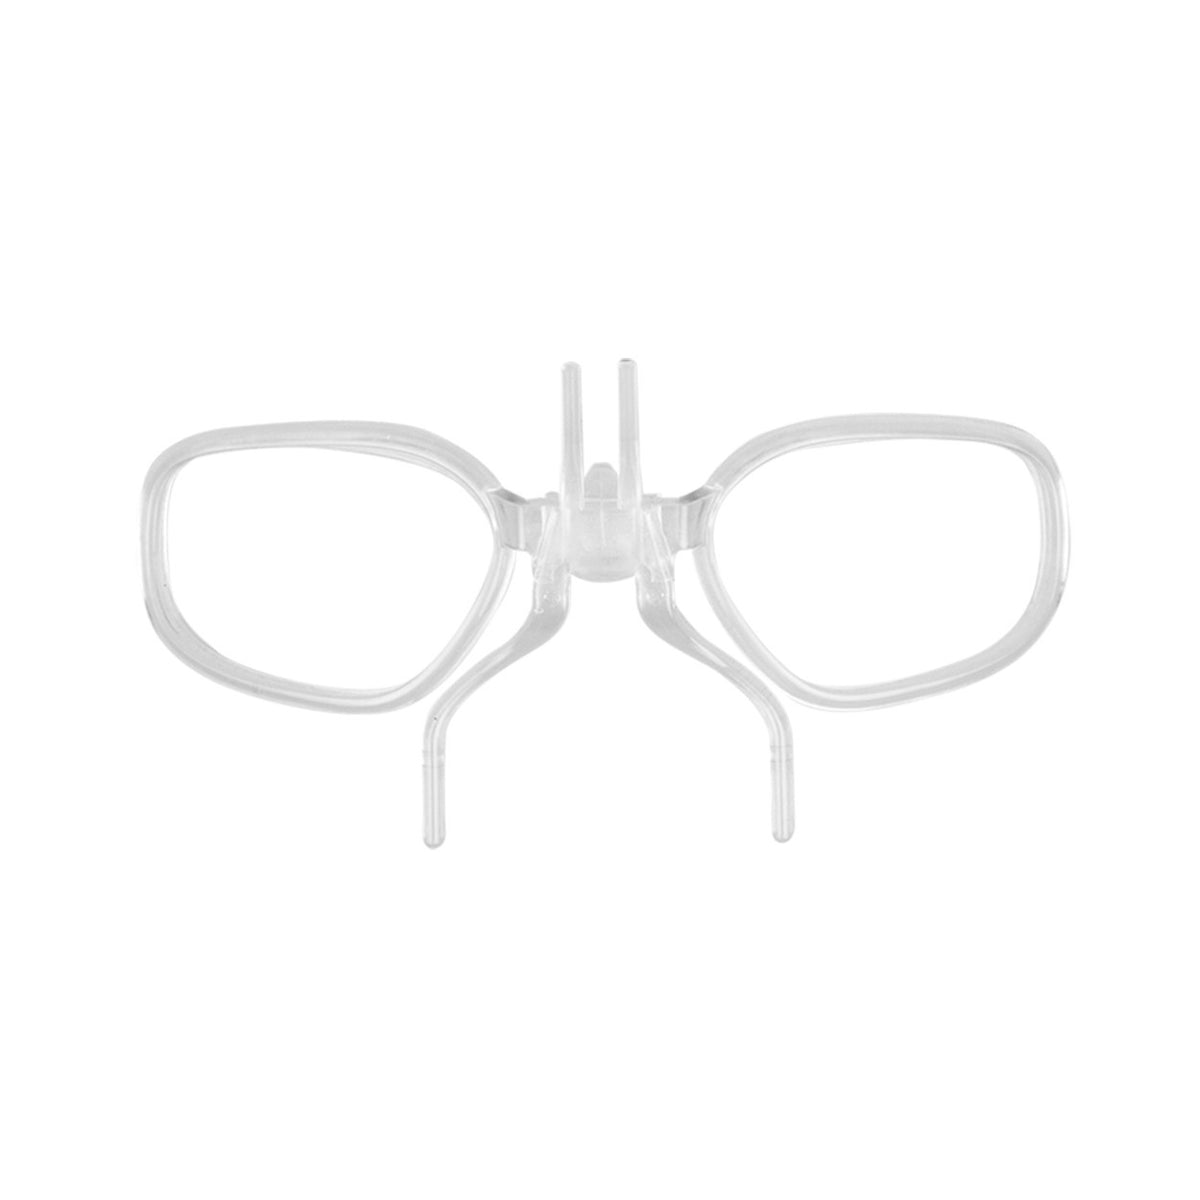 Valken V-TAC Tango Thermal Goggles Olive